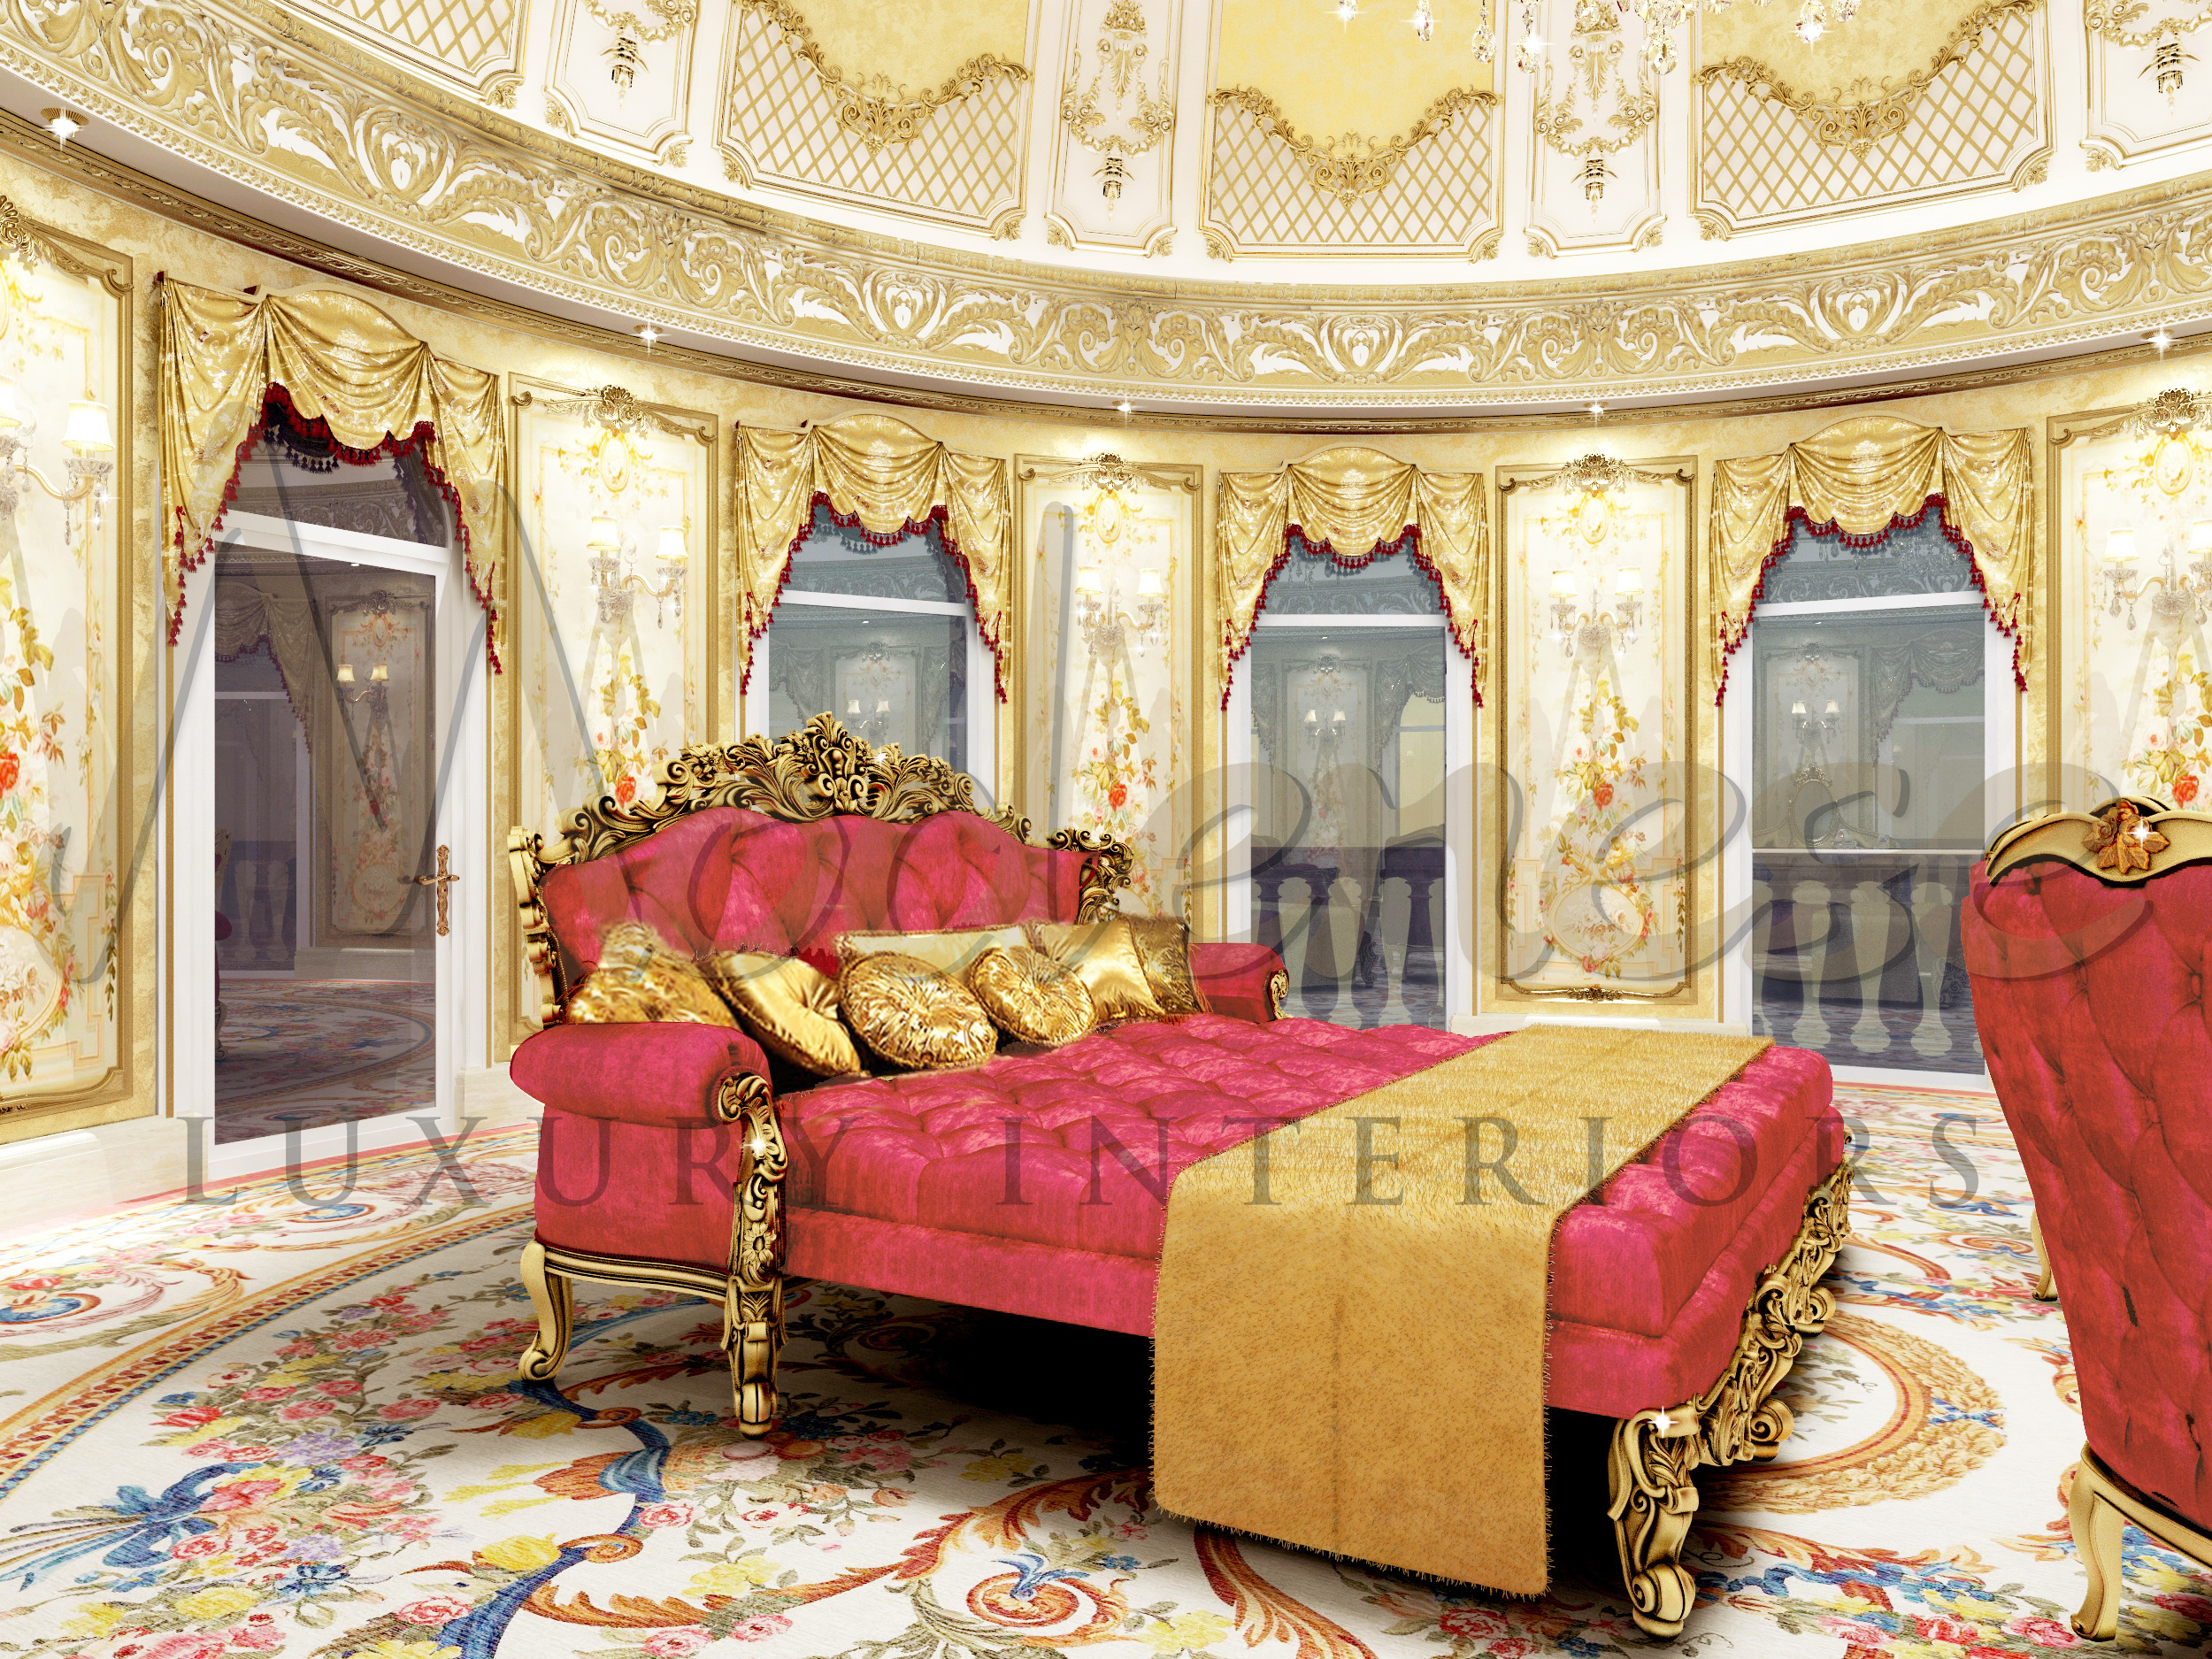 Italian handmade interiors. Bespoke interior design project and artisanal furniture production. Luxury Bedroom Design